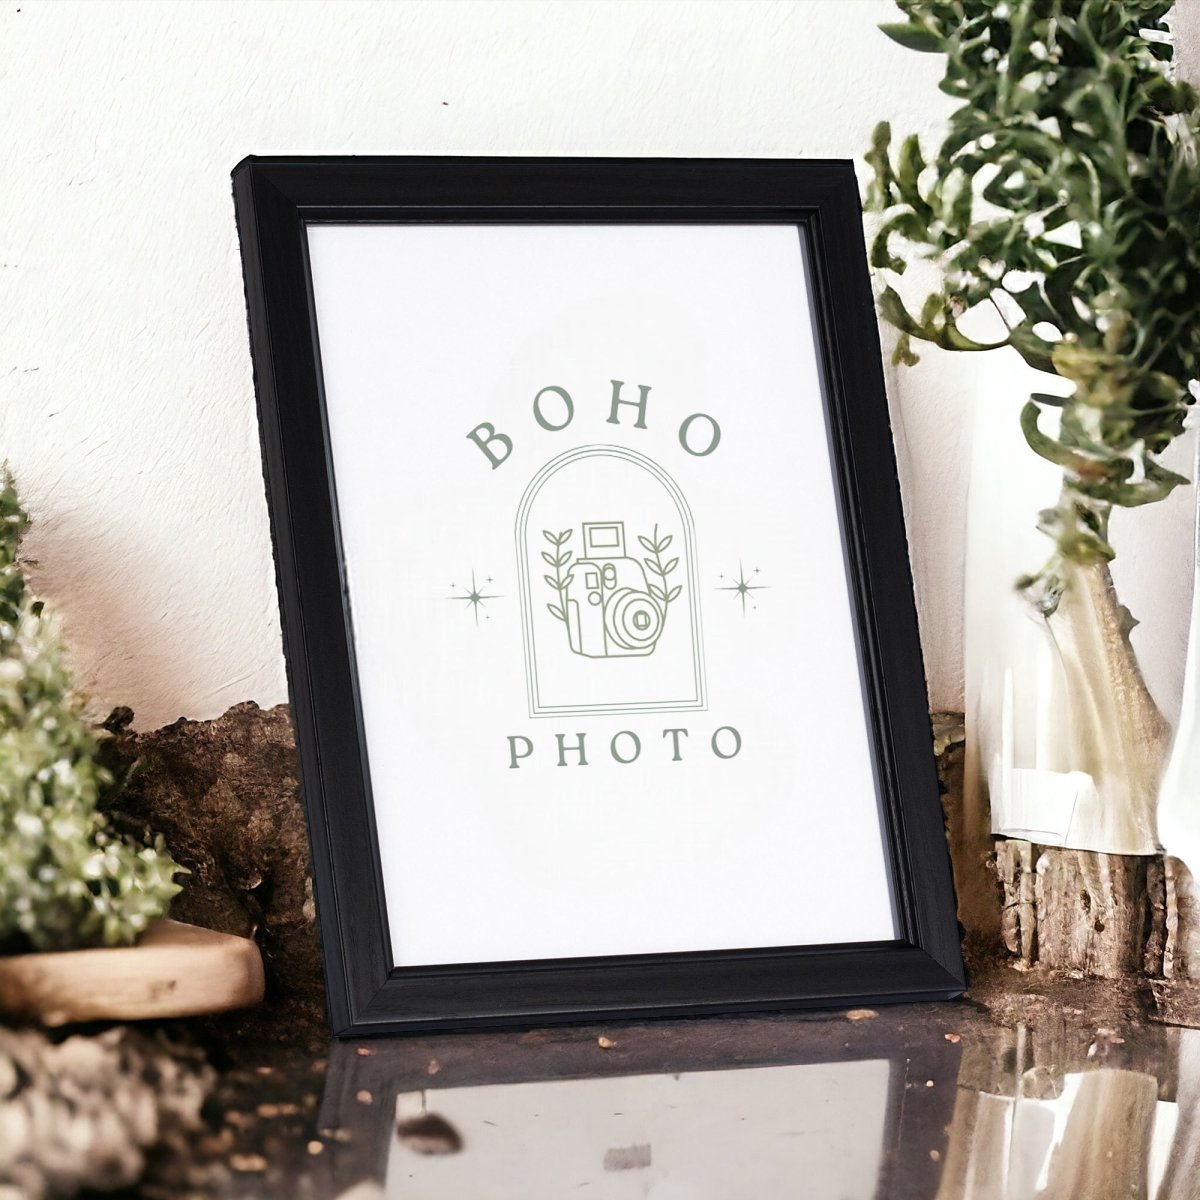 Framed Print -8x6 print - 10x8 FramePhoto PrintingBoho Photo